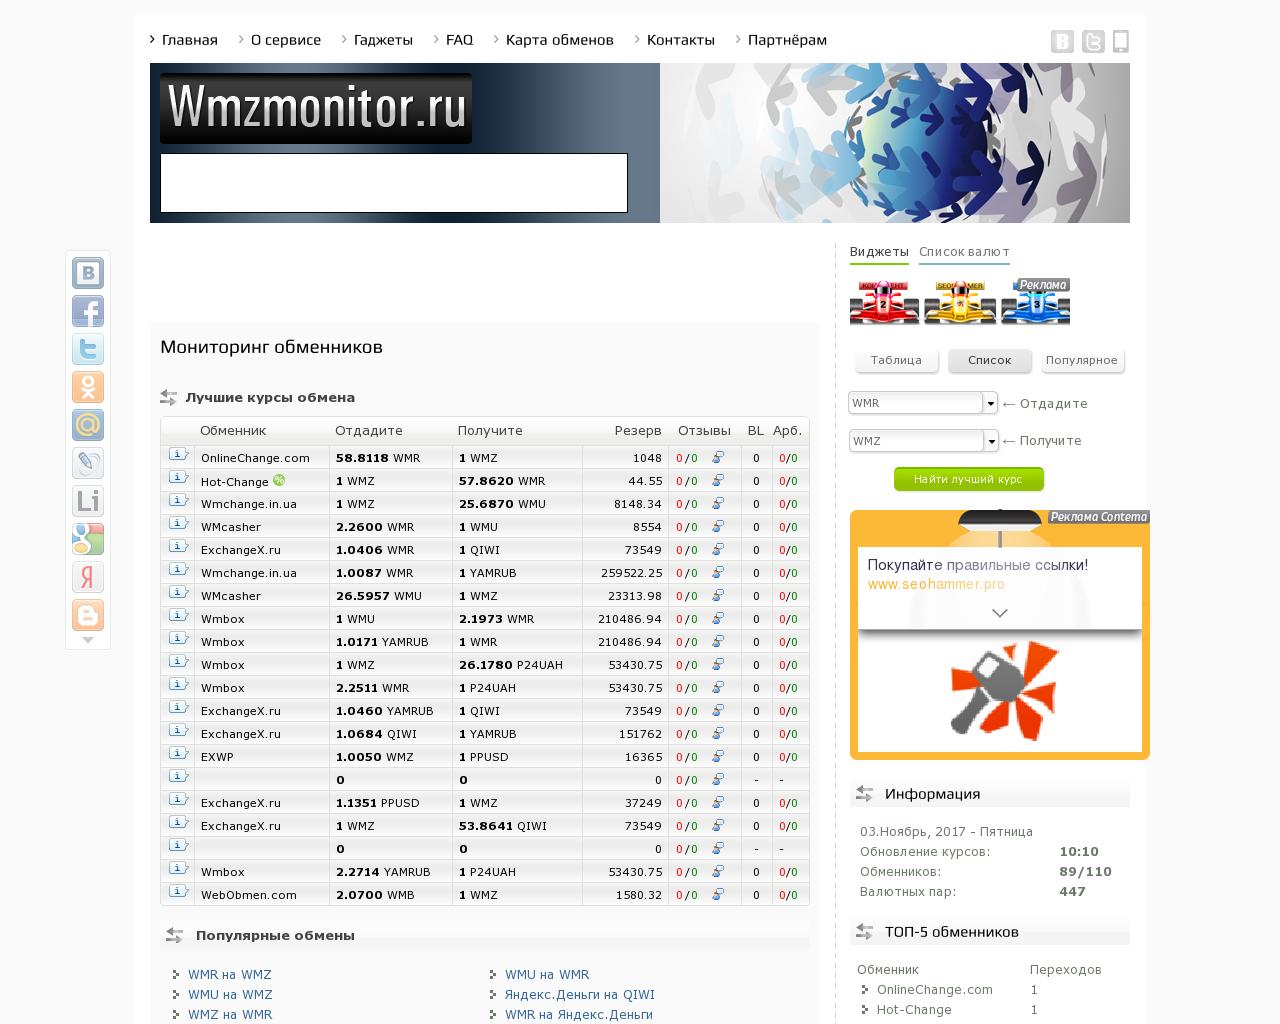 Изображение сайта wmzmonitor.ru в разрешении 1280x1024